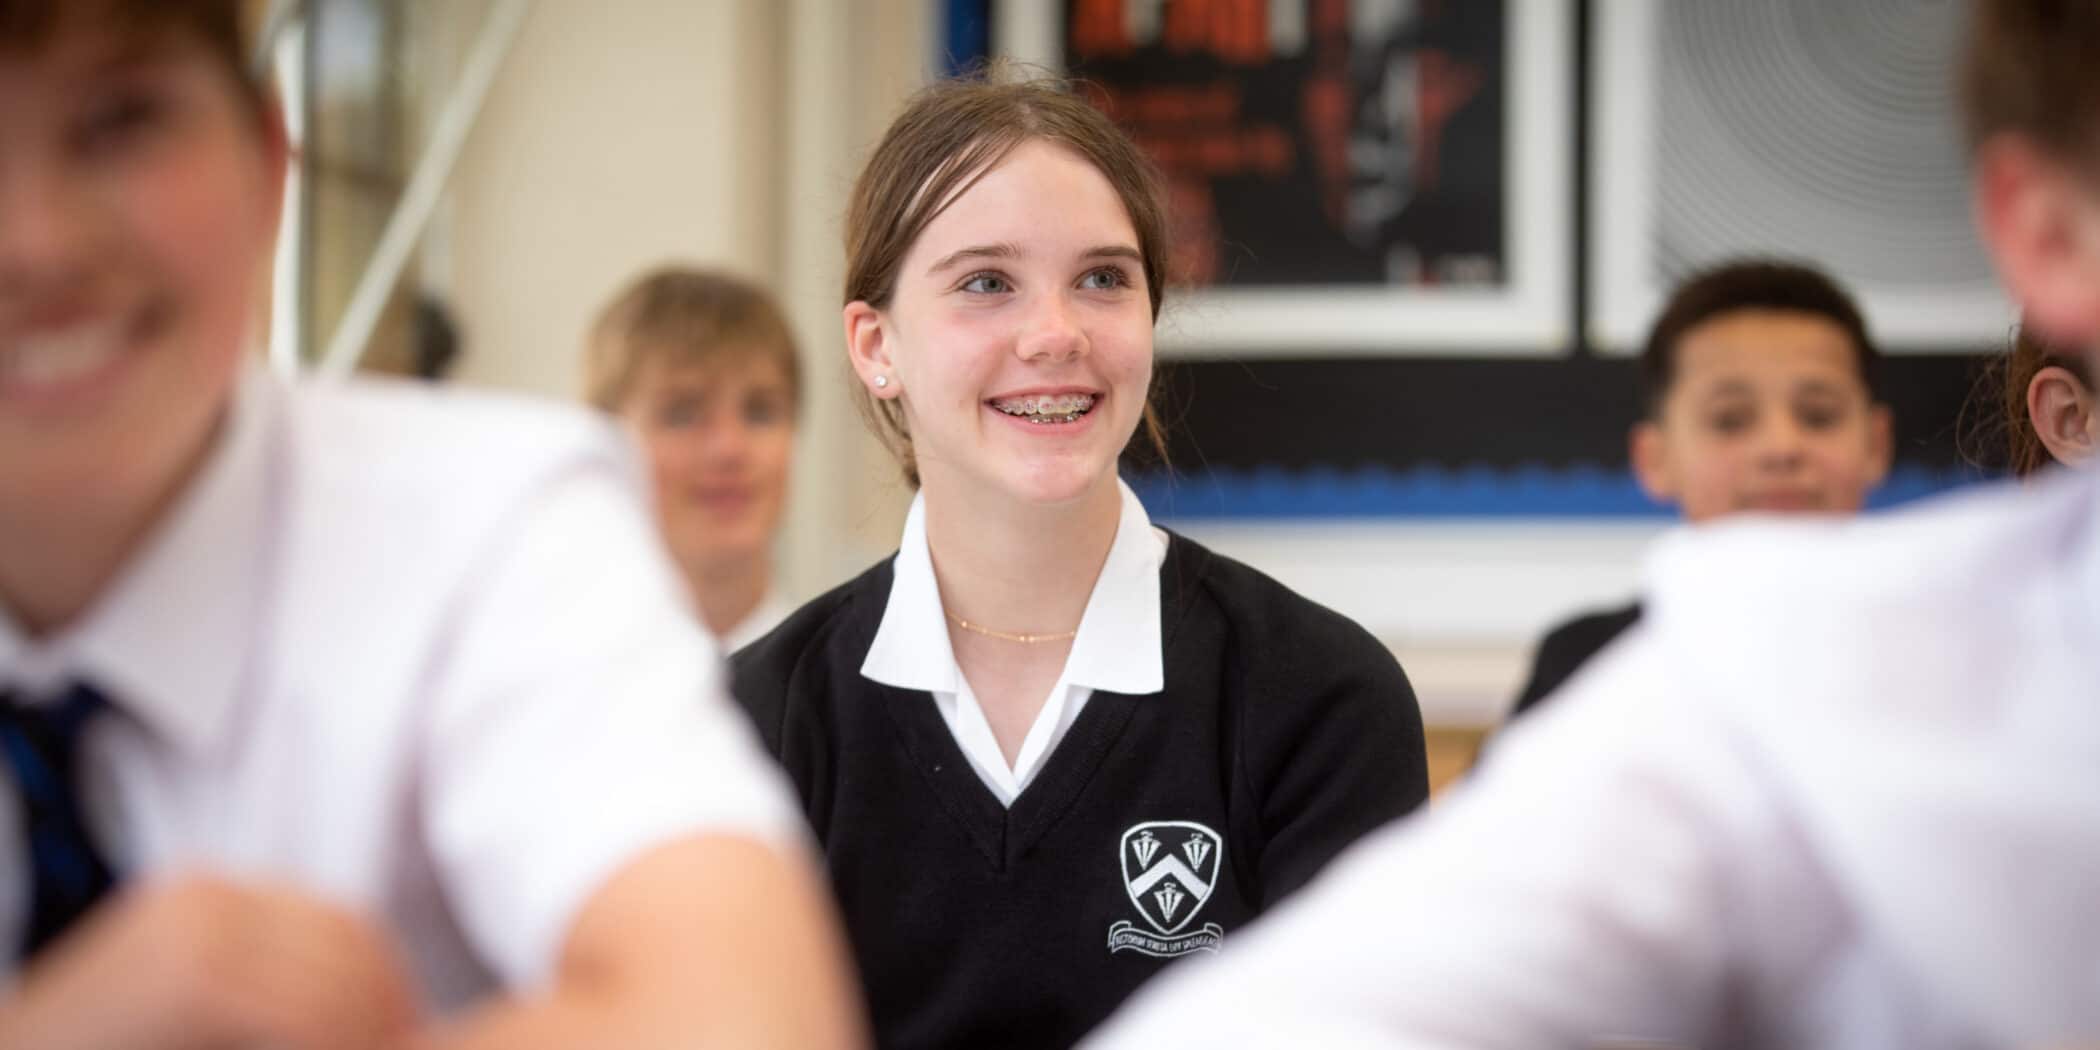 Bloxham school student welcoming smile